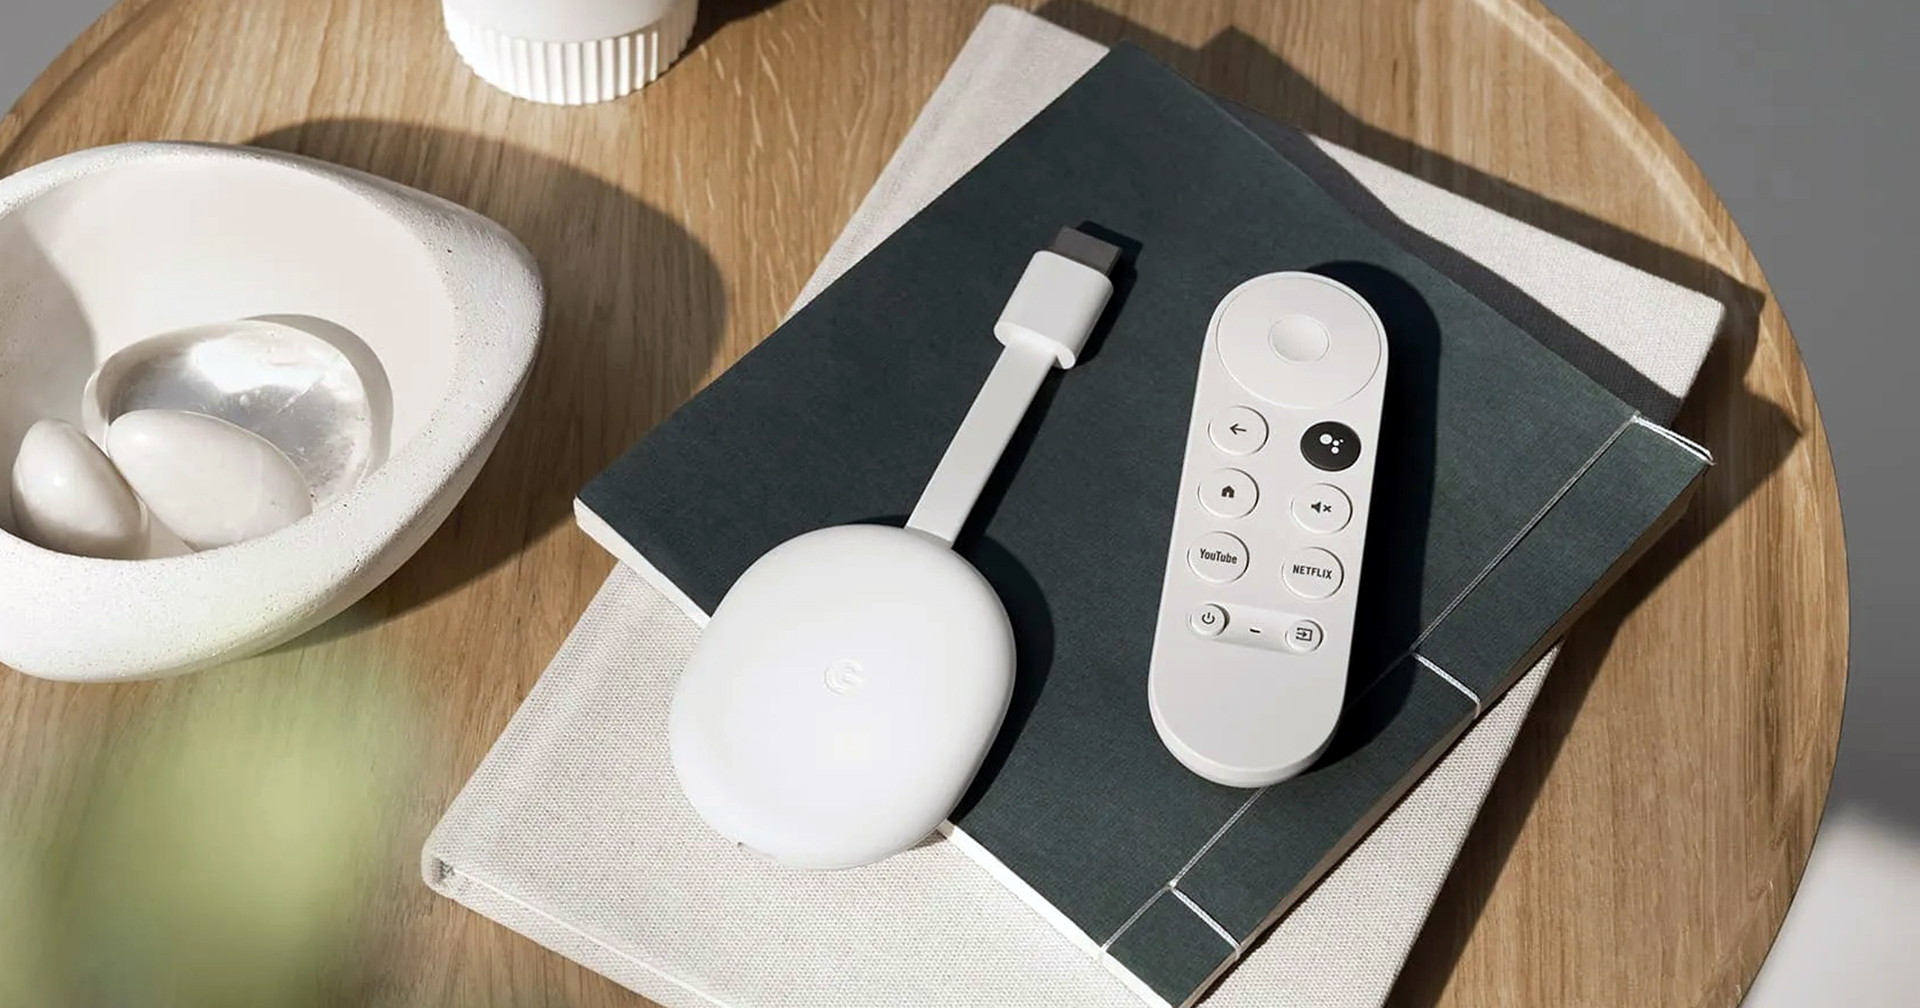 Google เปิดตัว ‘Chromecast with Google TV’ ตัวใหม่ที่ลดสเปกลงเหลือ Full HD ขายเพียง 1,100 บาท